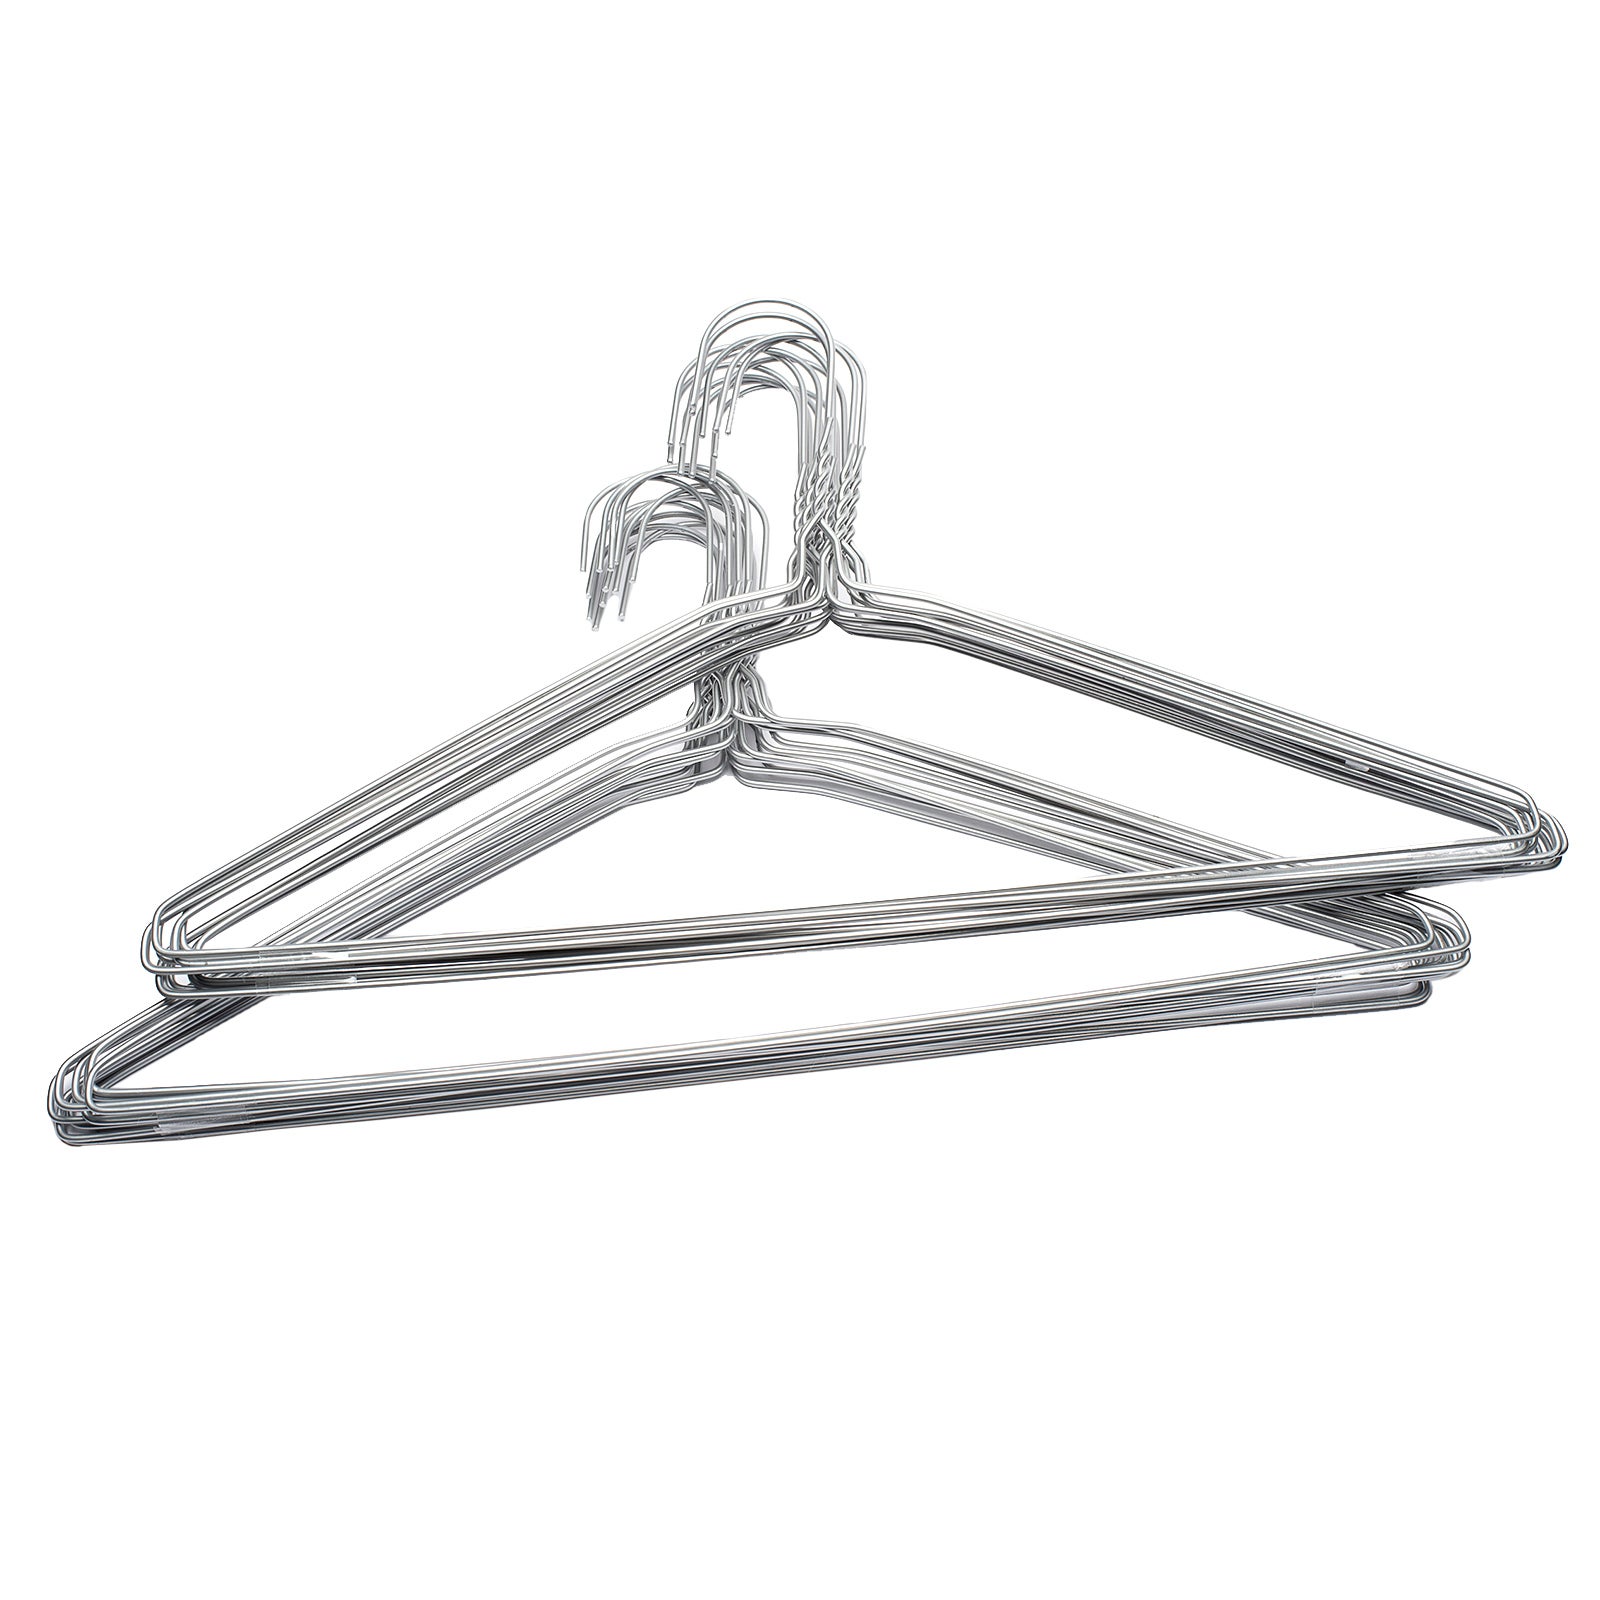 Silver Wire Coat-hangers - 50pcs